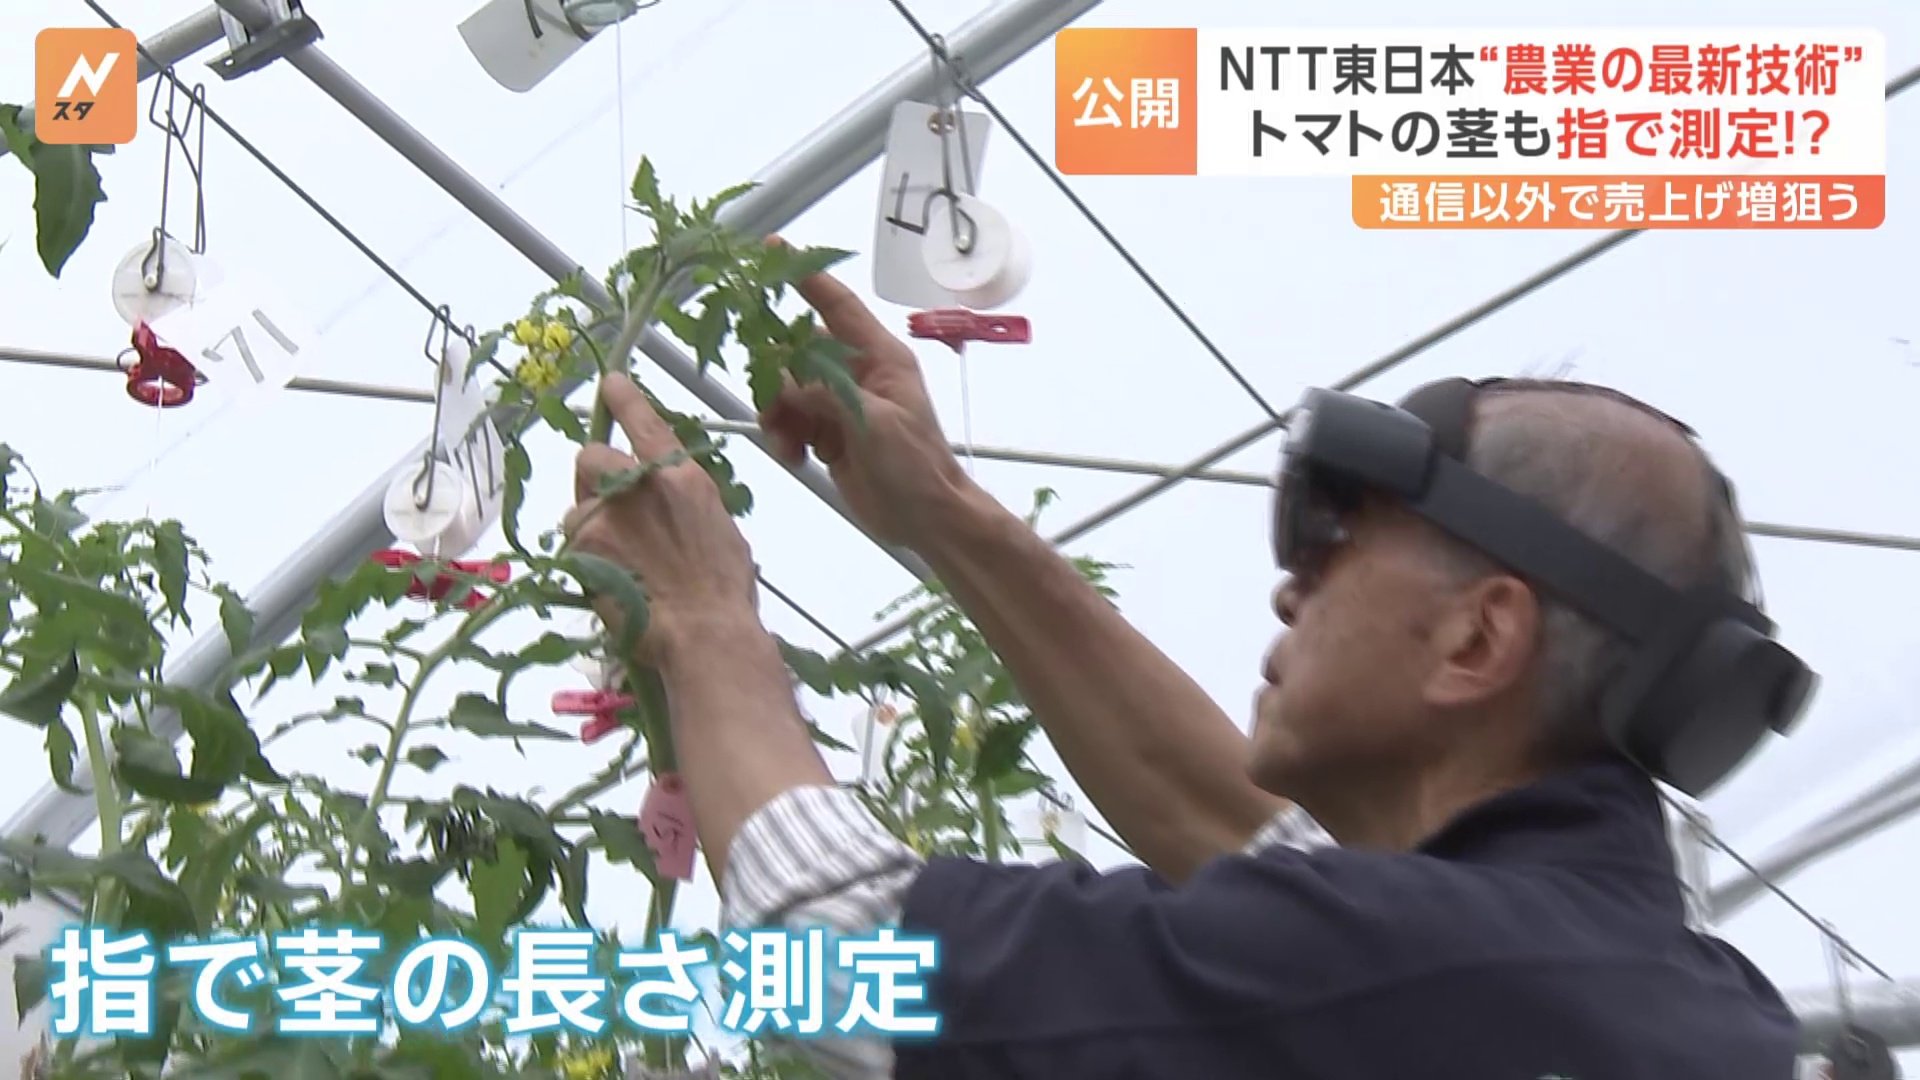 NTT東日本がスマート農業の技術を公開　少子高齢化や担い手不足に対応する考え